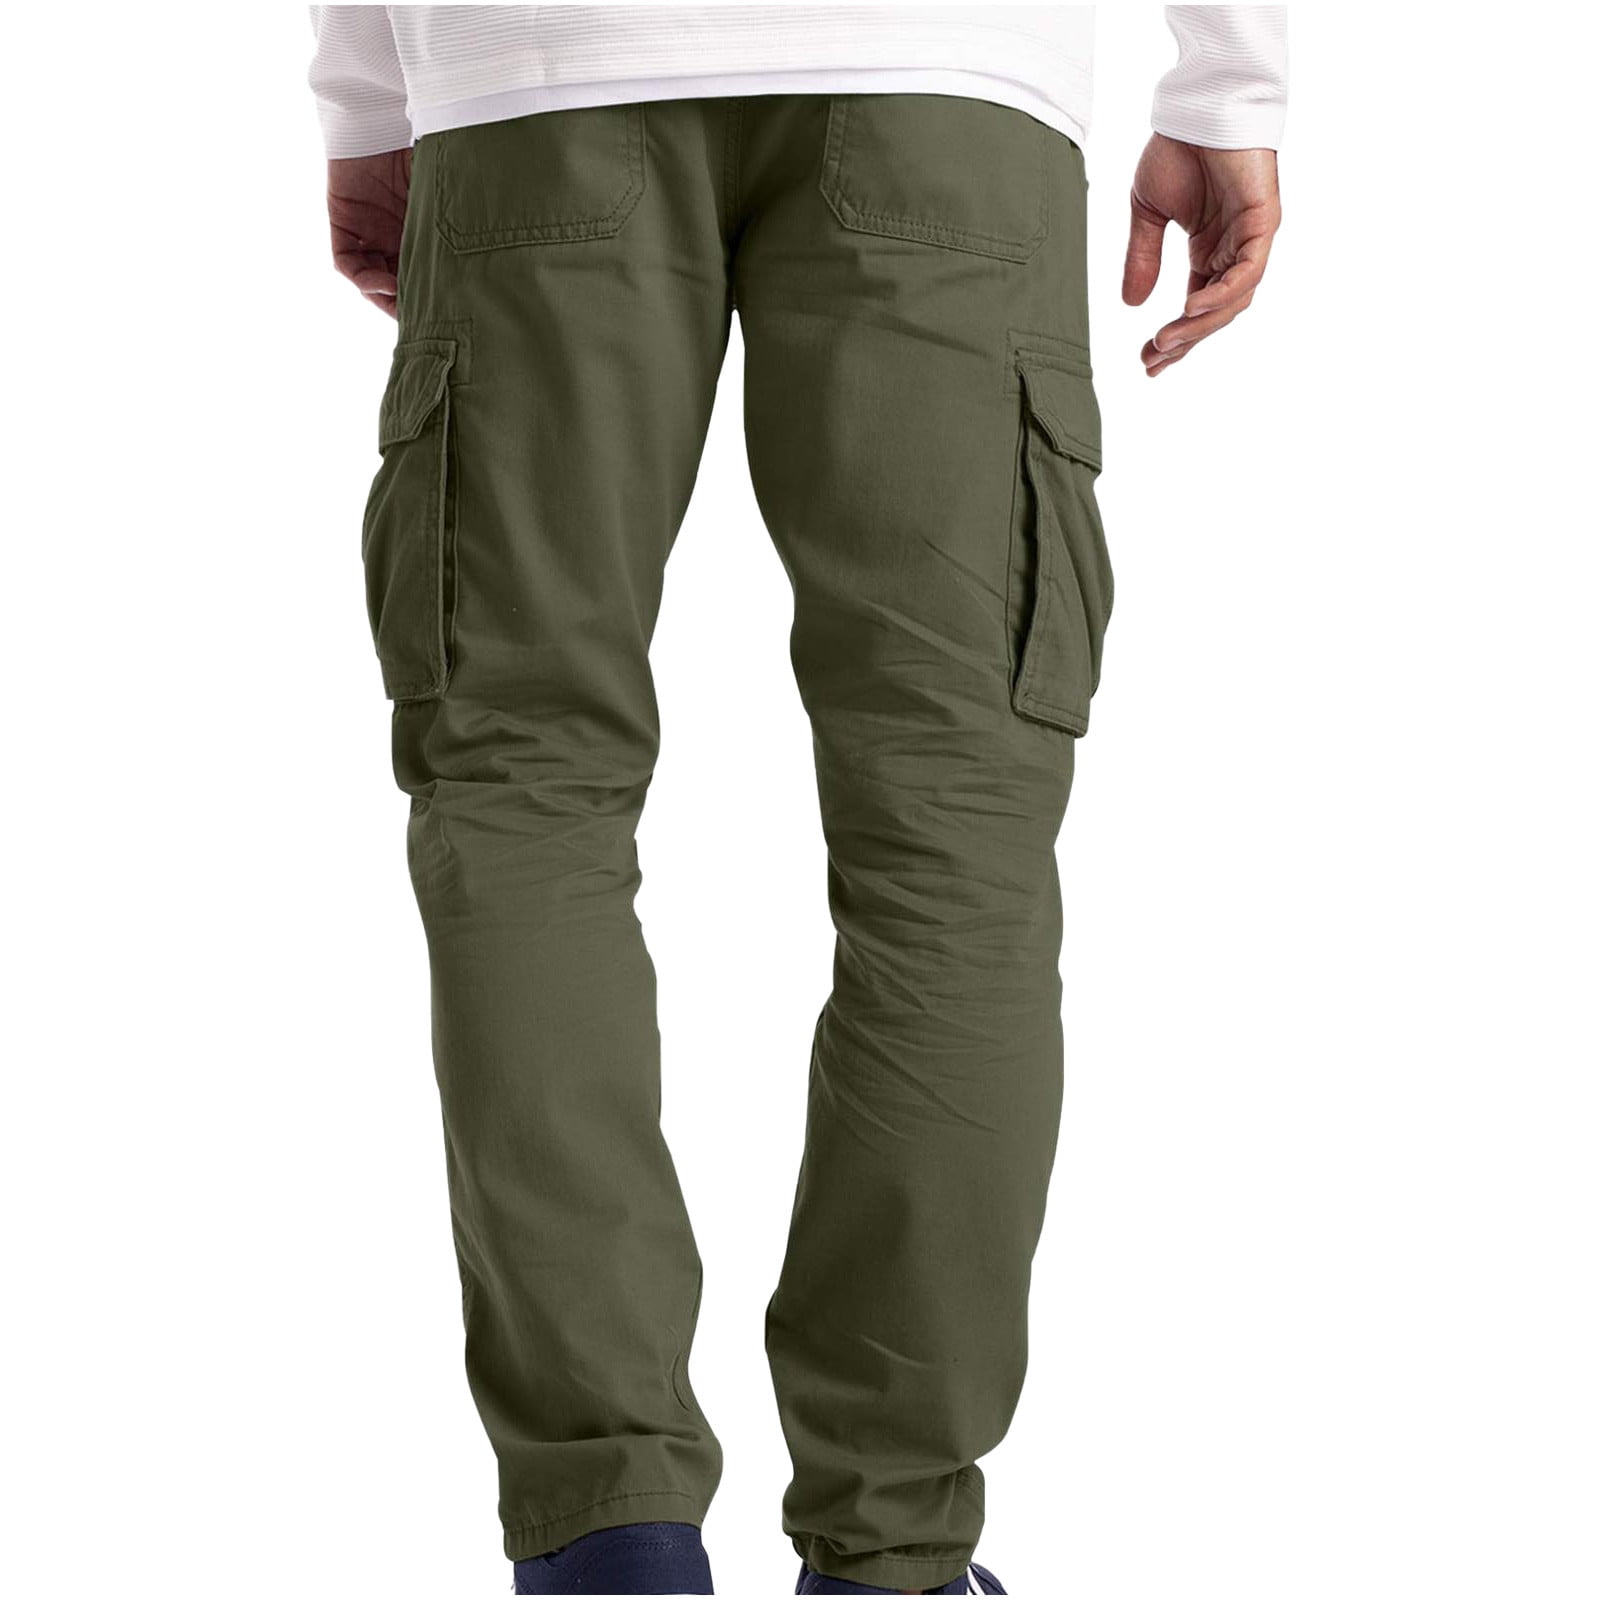  XIAXOGOOL Cargo Pants Man Big and Tall Mens Sweatpants Elastic  Waist Drawstring Tactical Pants Work Pants Ripstop Pants for Men with  Pockets Mens Joggers Army Green M : Sports & Outdoors